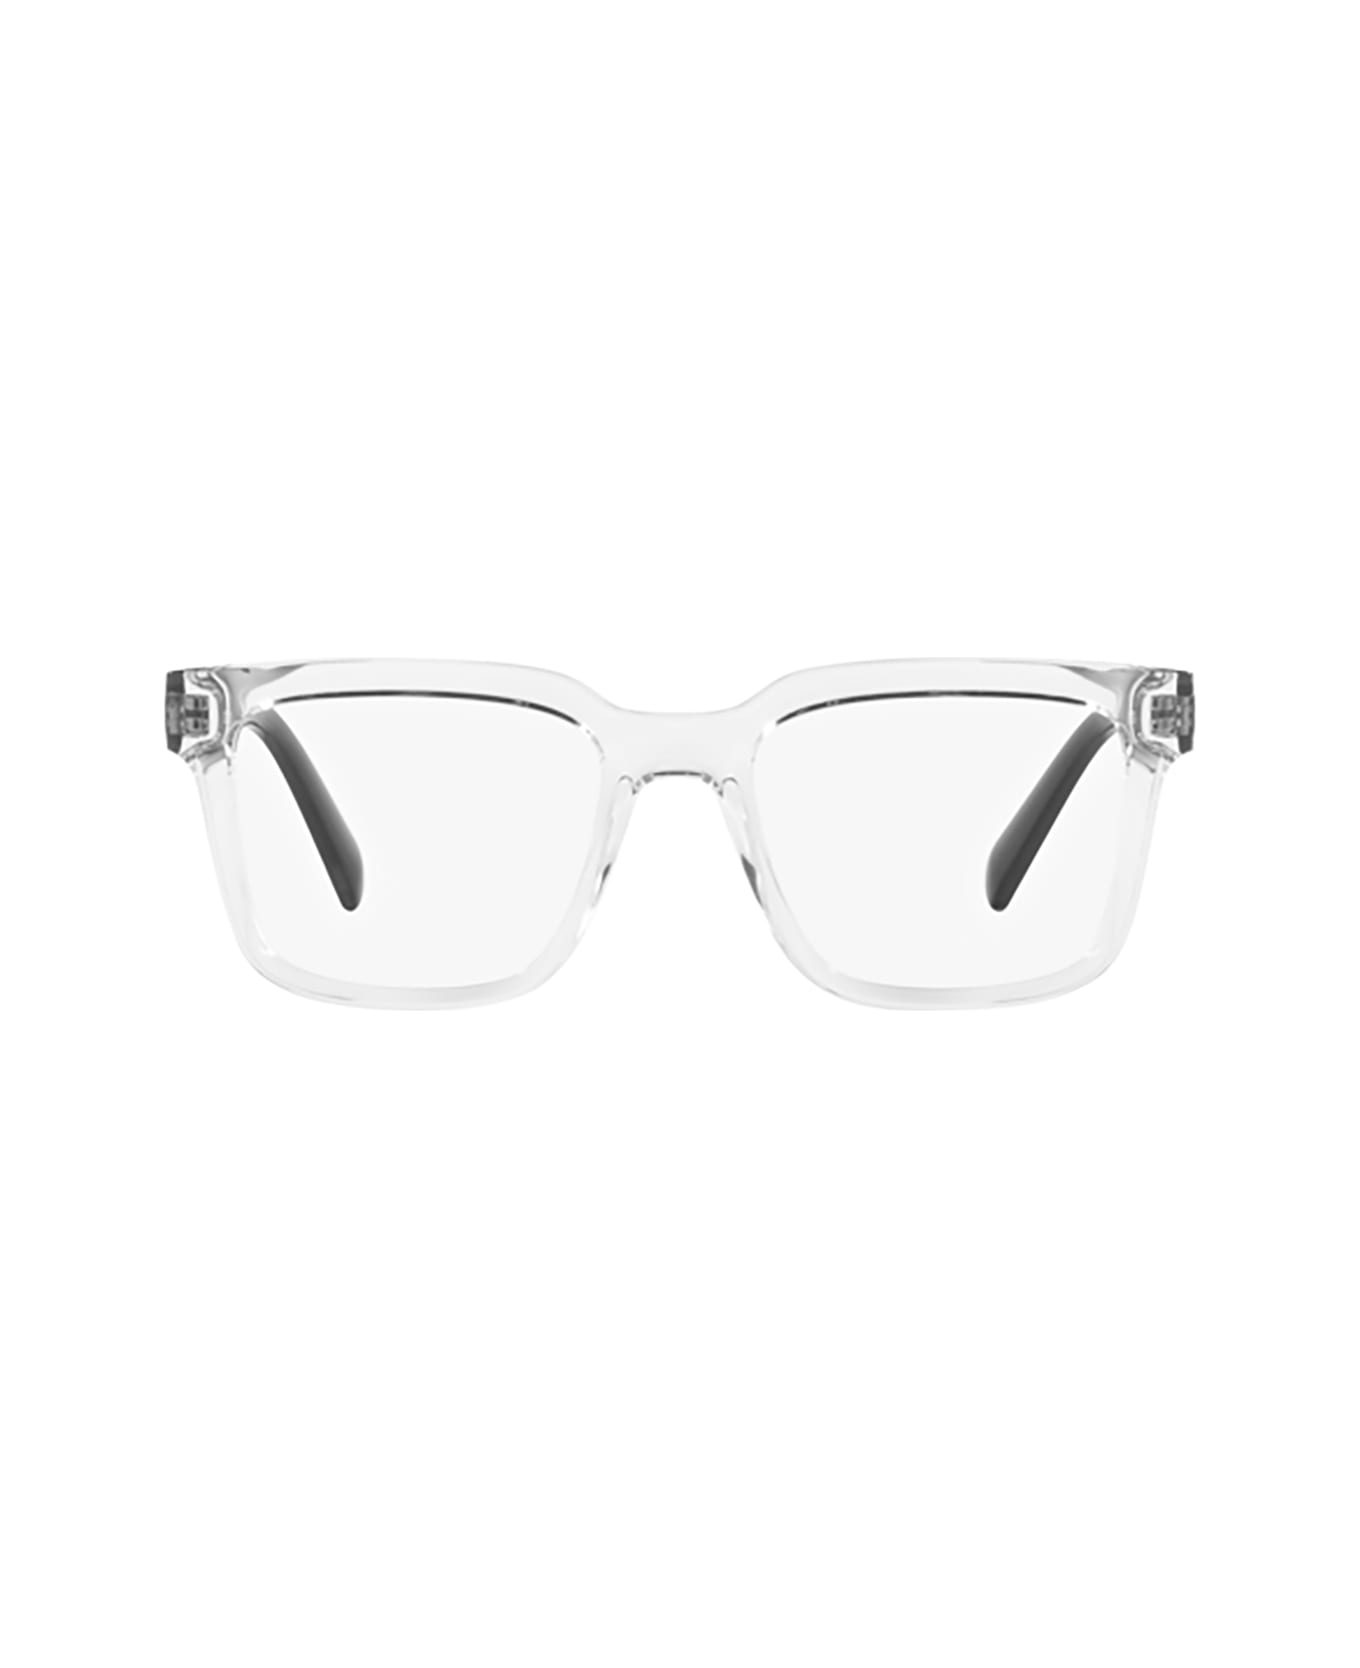 Dolce & Gabbana Eyewear Dg5101 Crystal Glasses - Crystal アイウェア